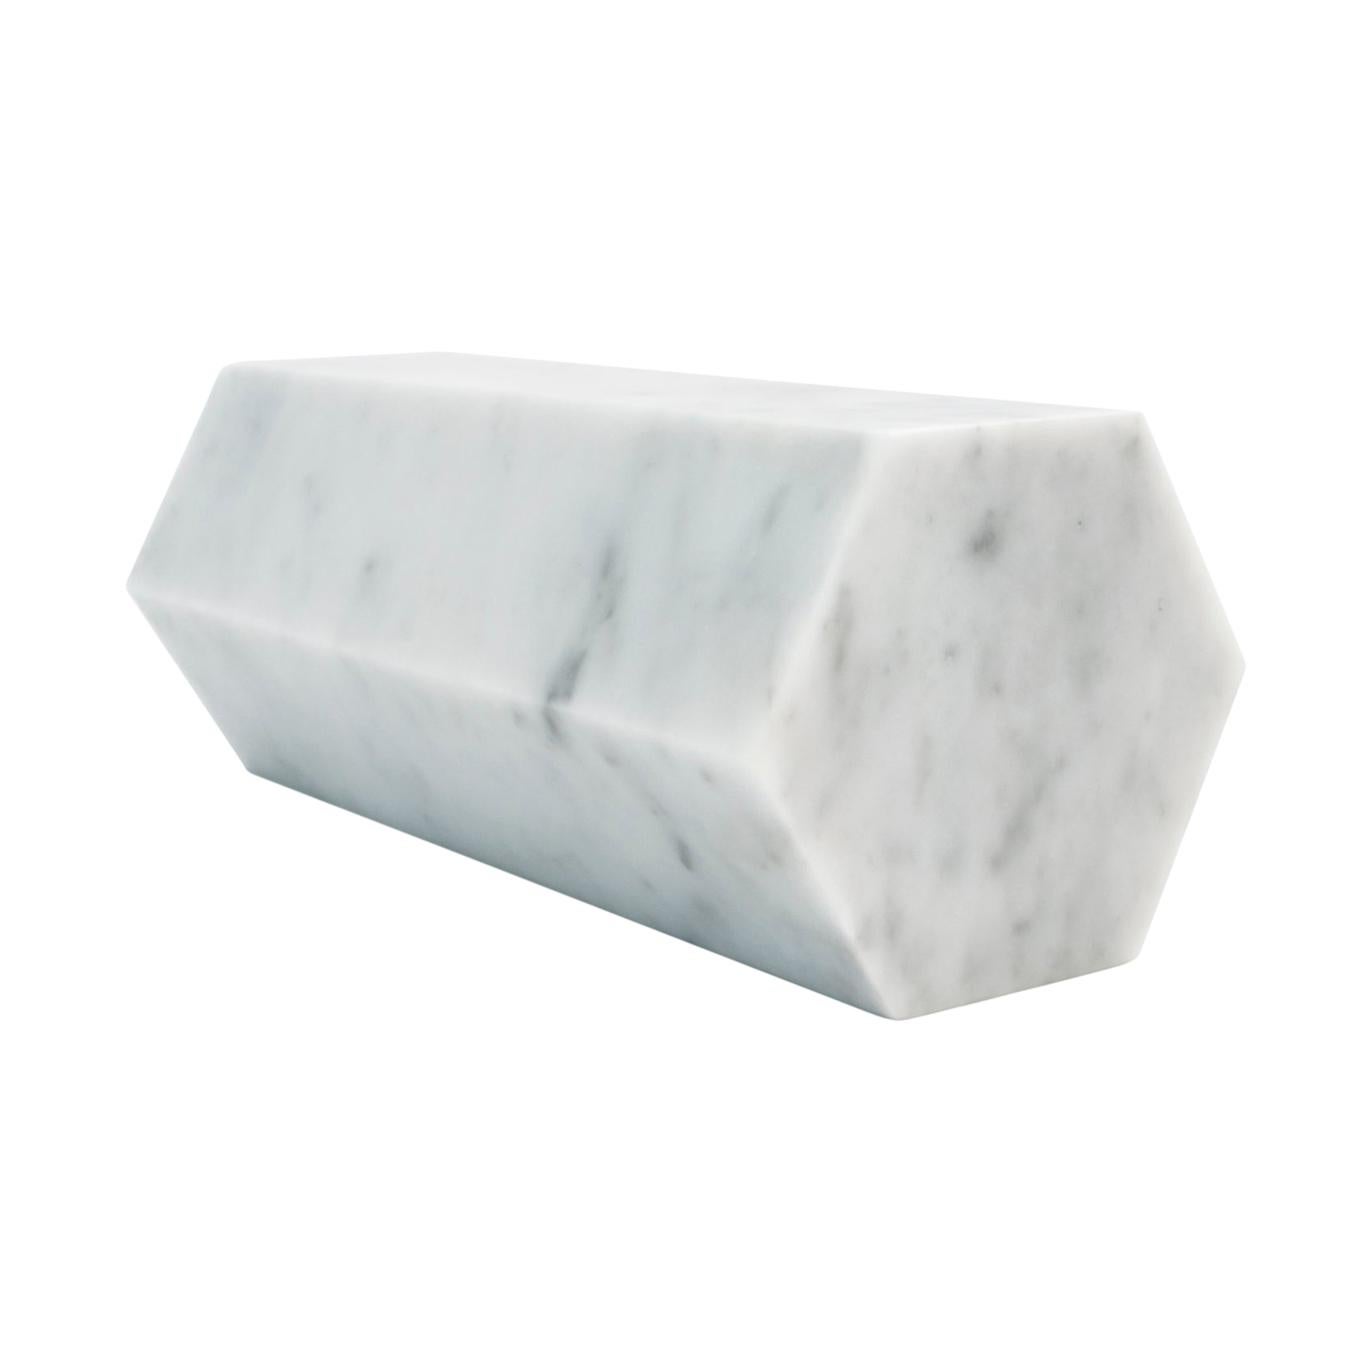 Handmade Big Decorative Prism / Bookend in Satin White Carrara Marble